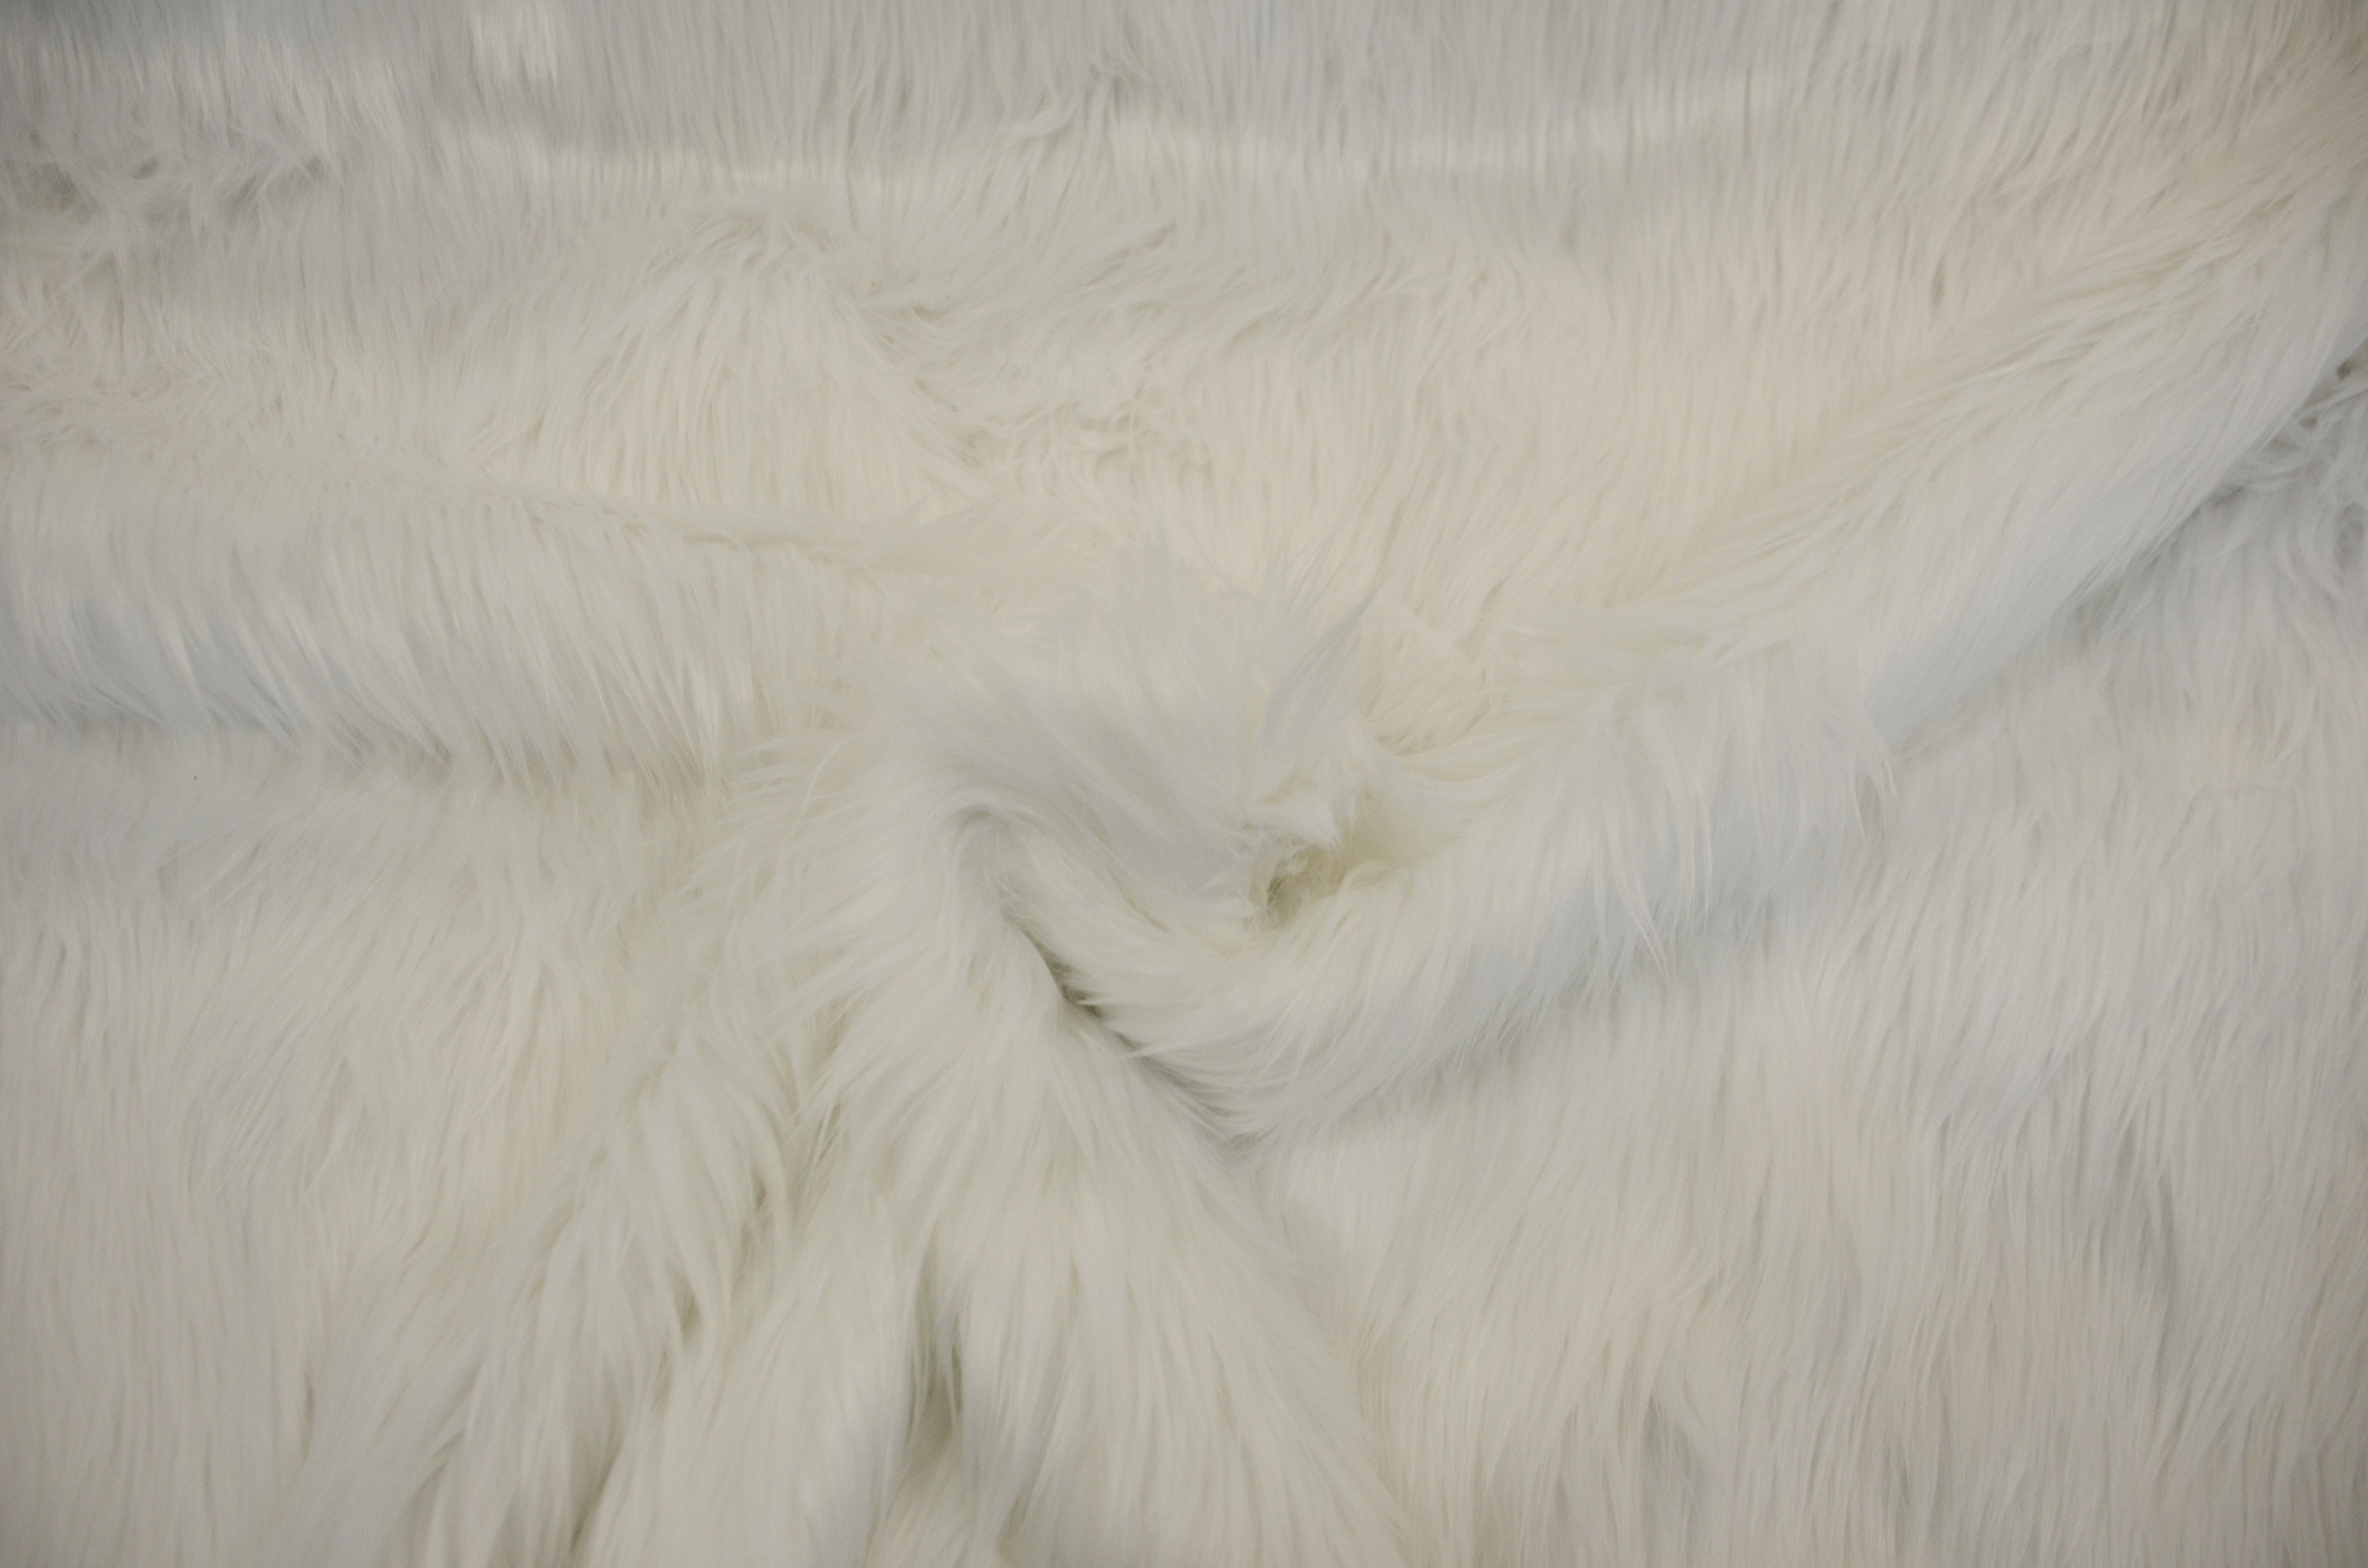 White Fur Fabric Free Shipping, White Fur Cloth Material